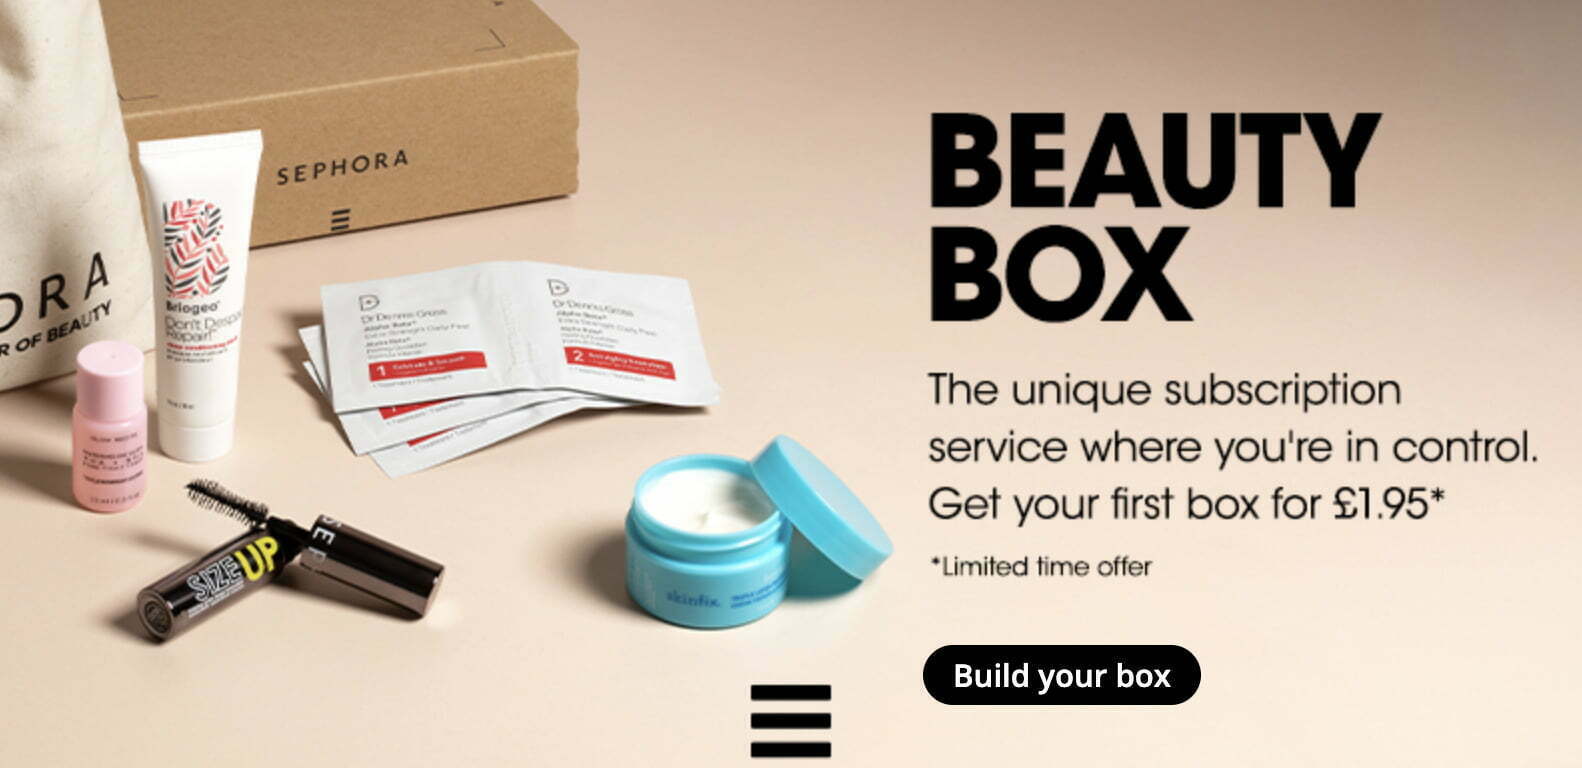 Sephora Beauty Box